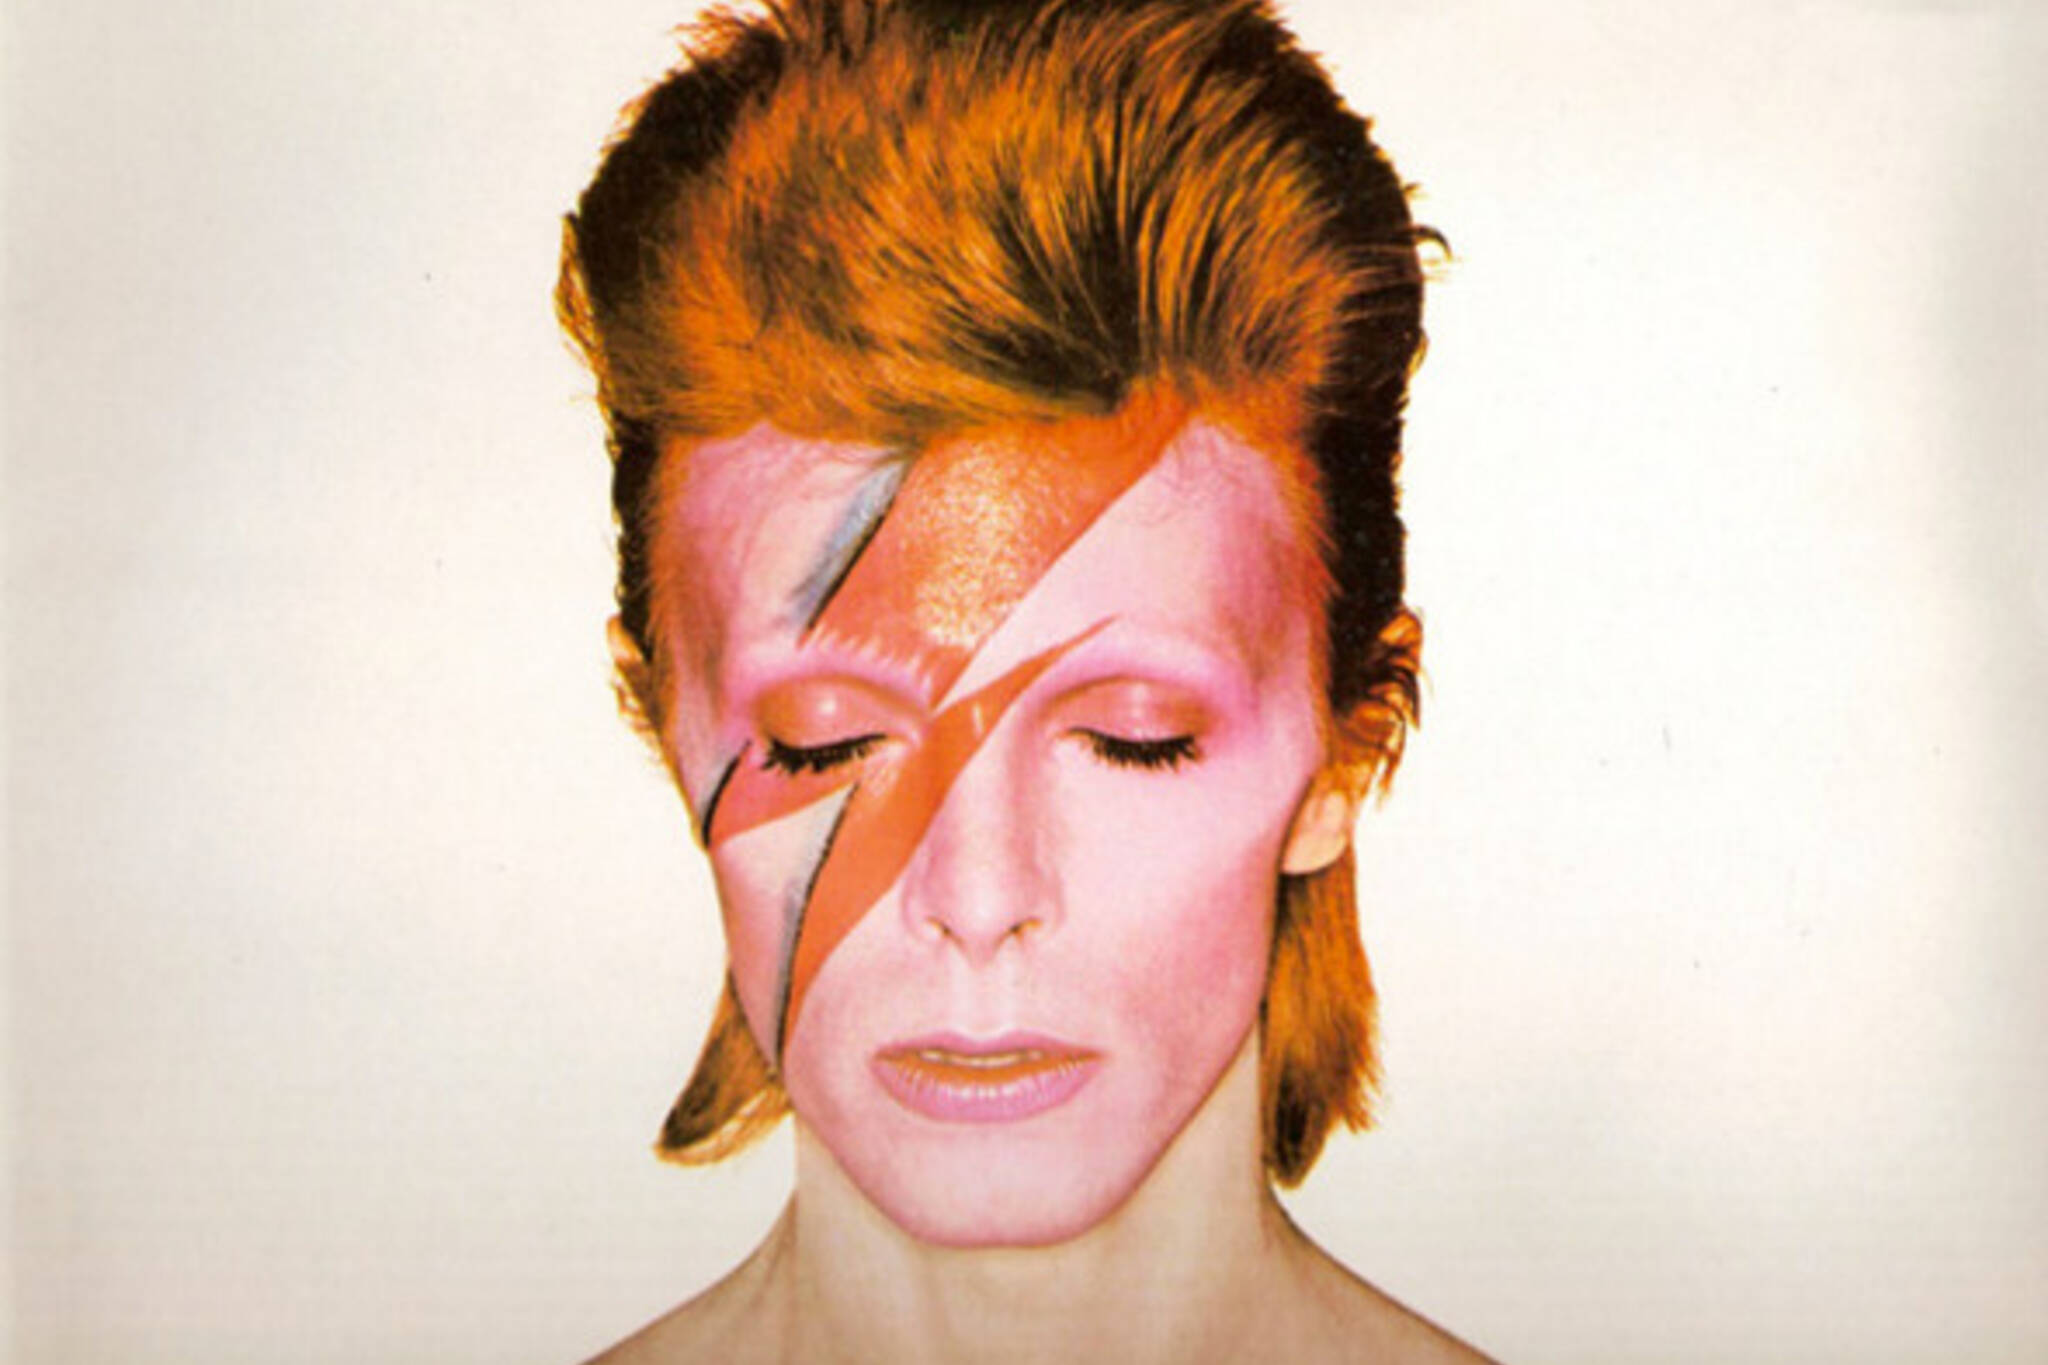 Toronto David Bowie